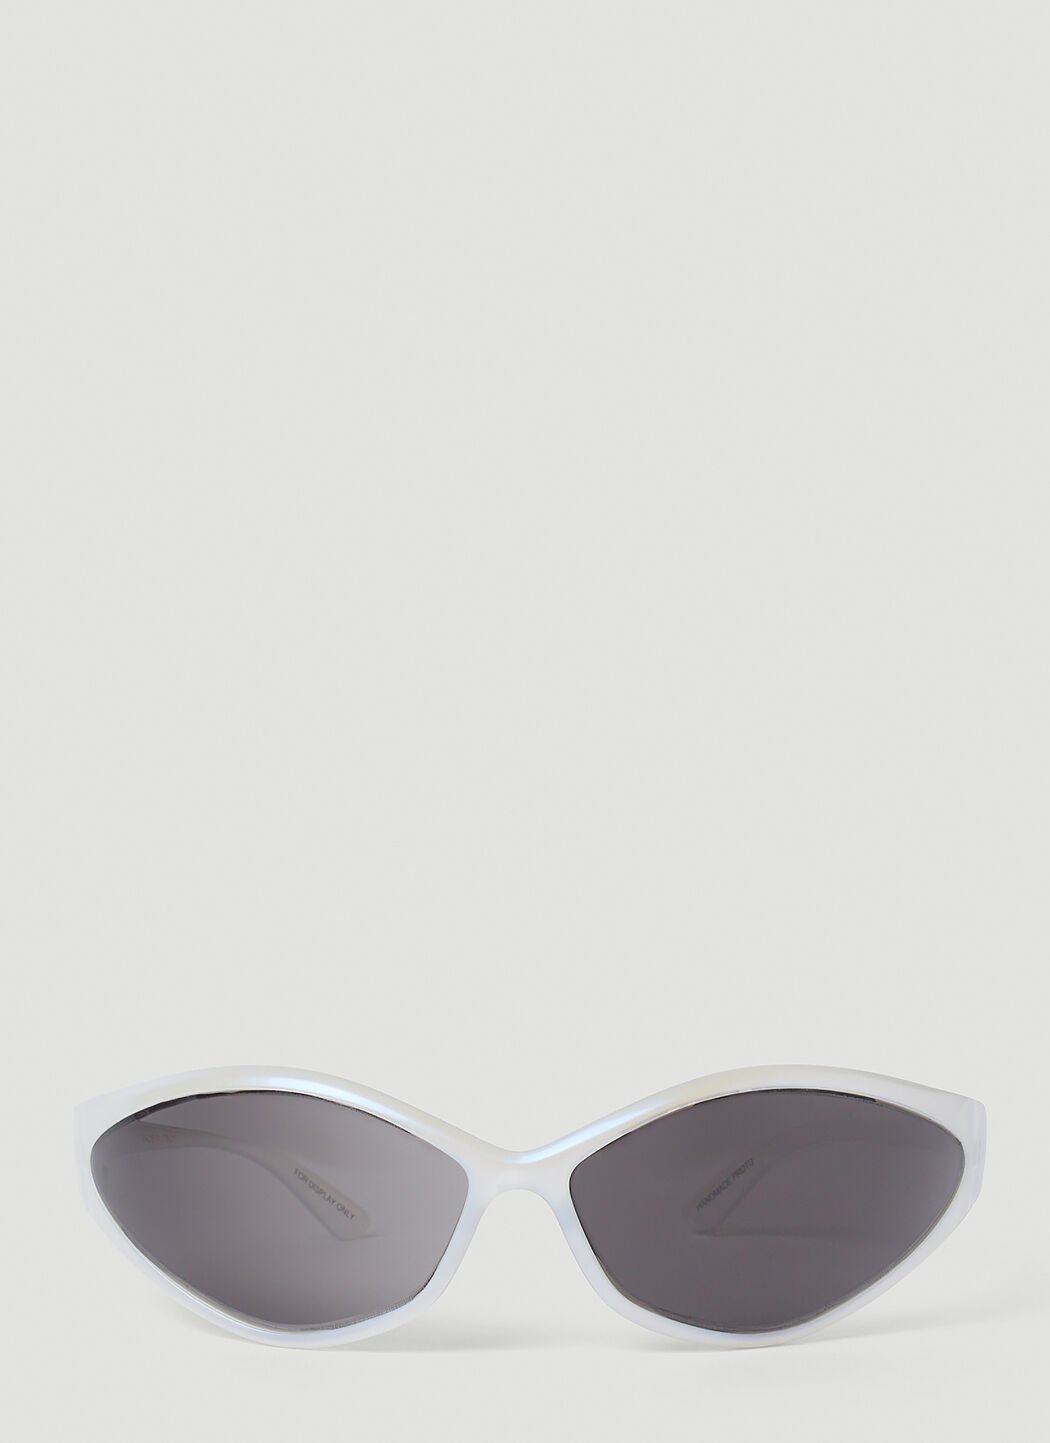 Chloé Swift Oval Sunglasses Black cls0255001